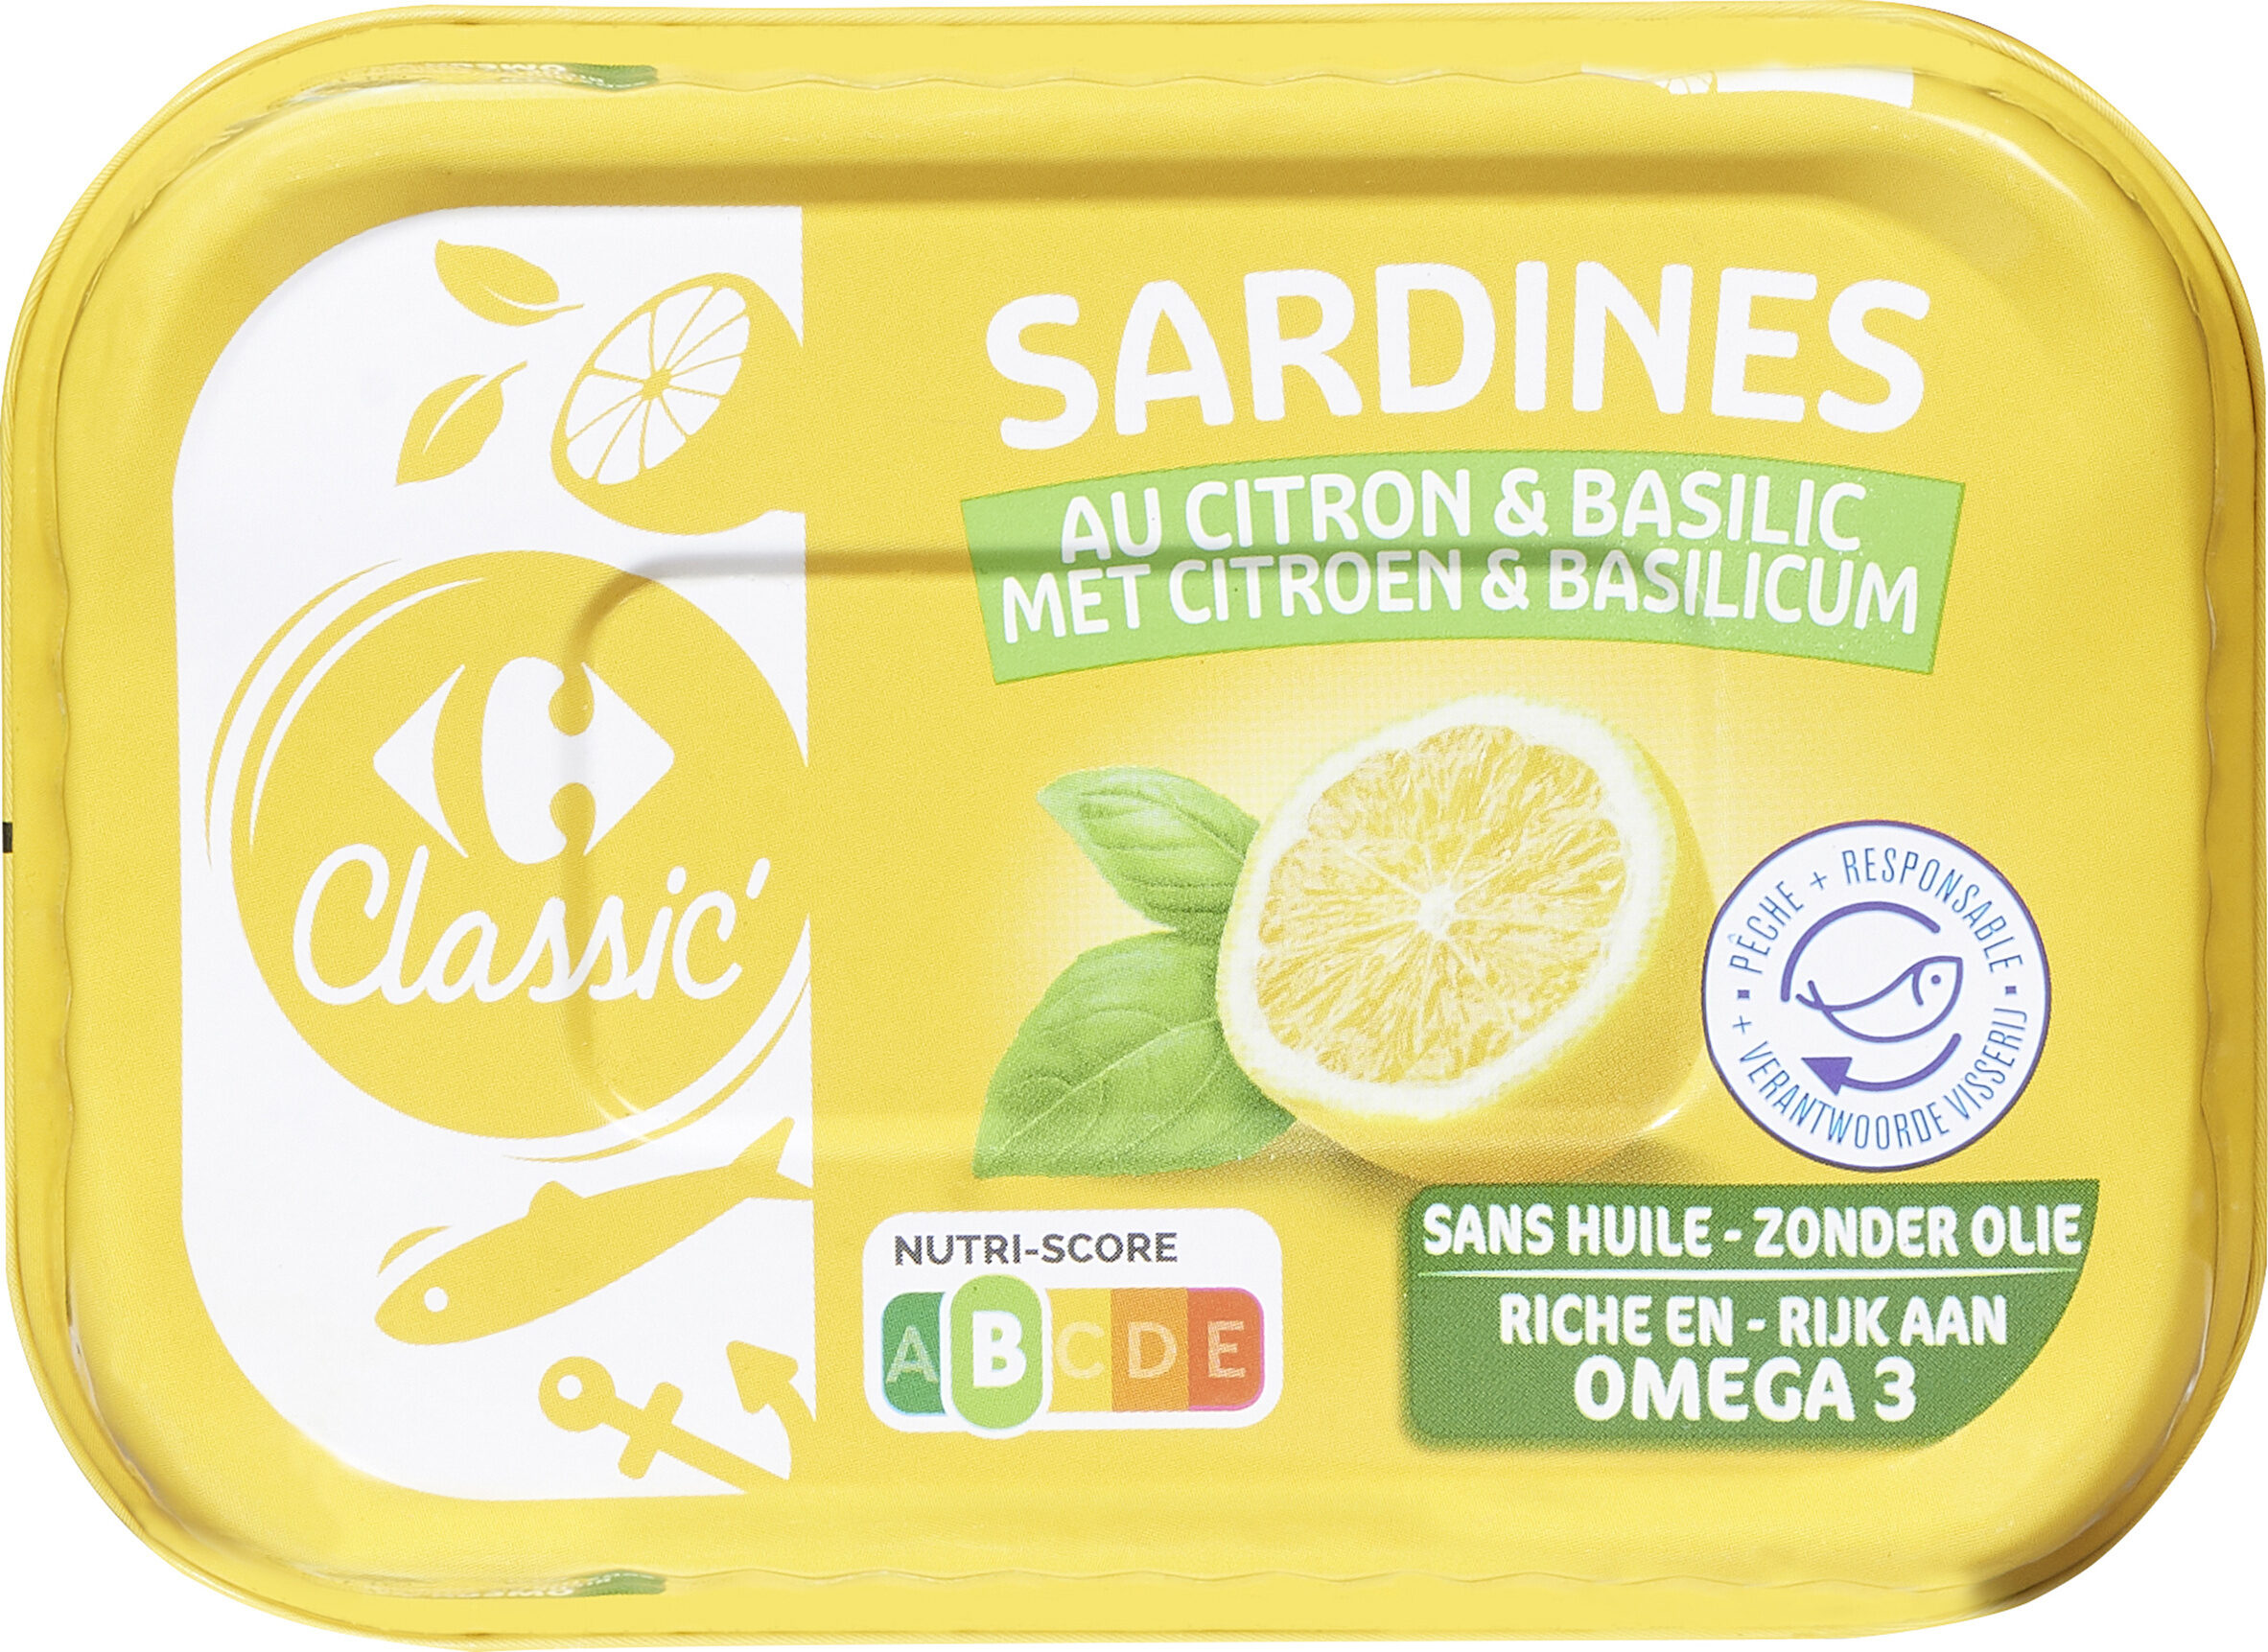 Sardines au citron & basilic - Produkt - fr